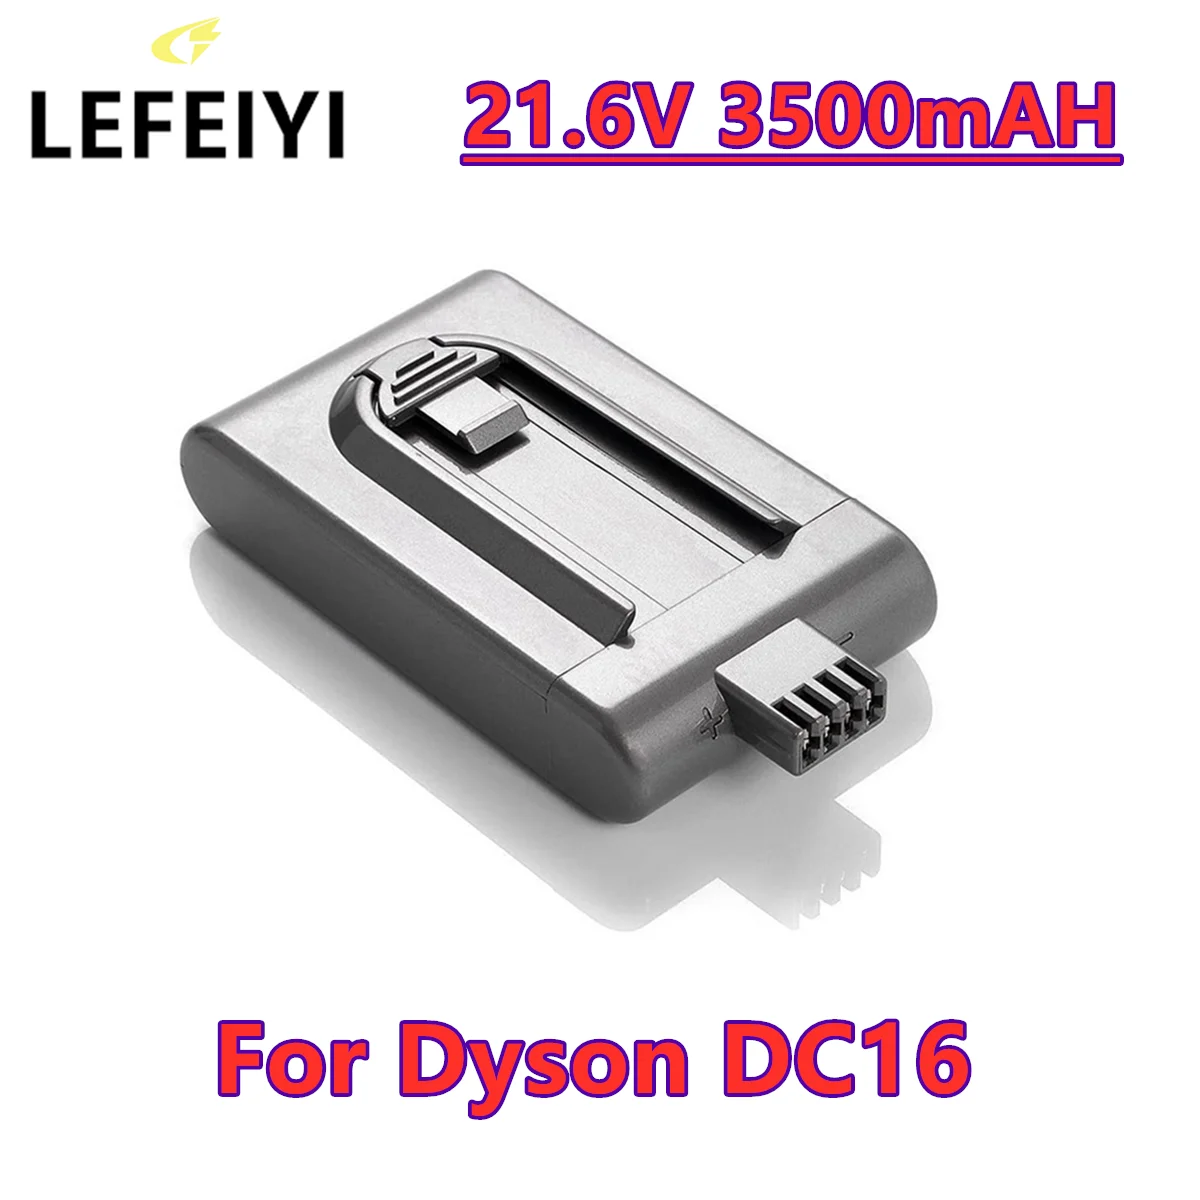 

LEFEIYI 3500mAh 21.6V Li-ion DC16 Vacuum Cleaner Replacement Battery for Dyson DC16 DC12 12097 BP01 912433-01 L50